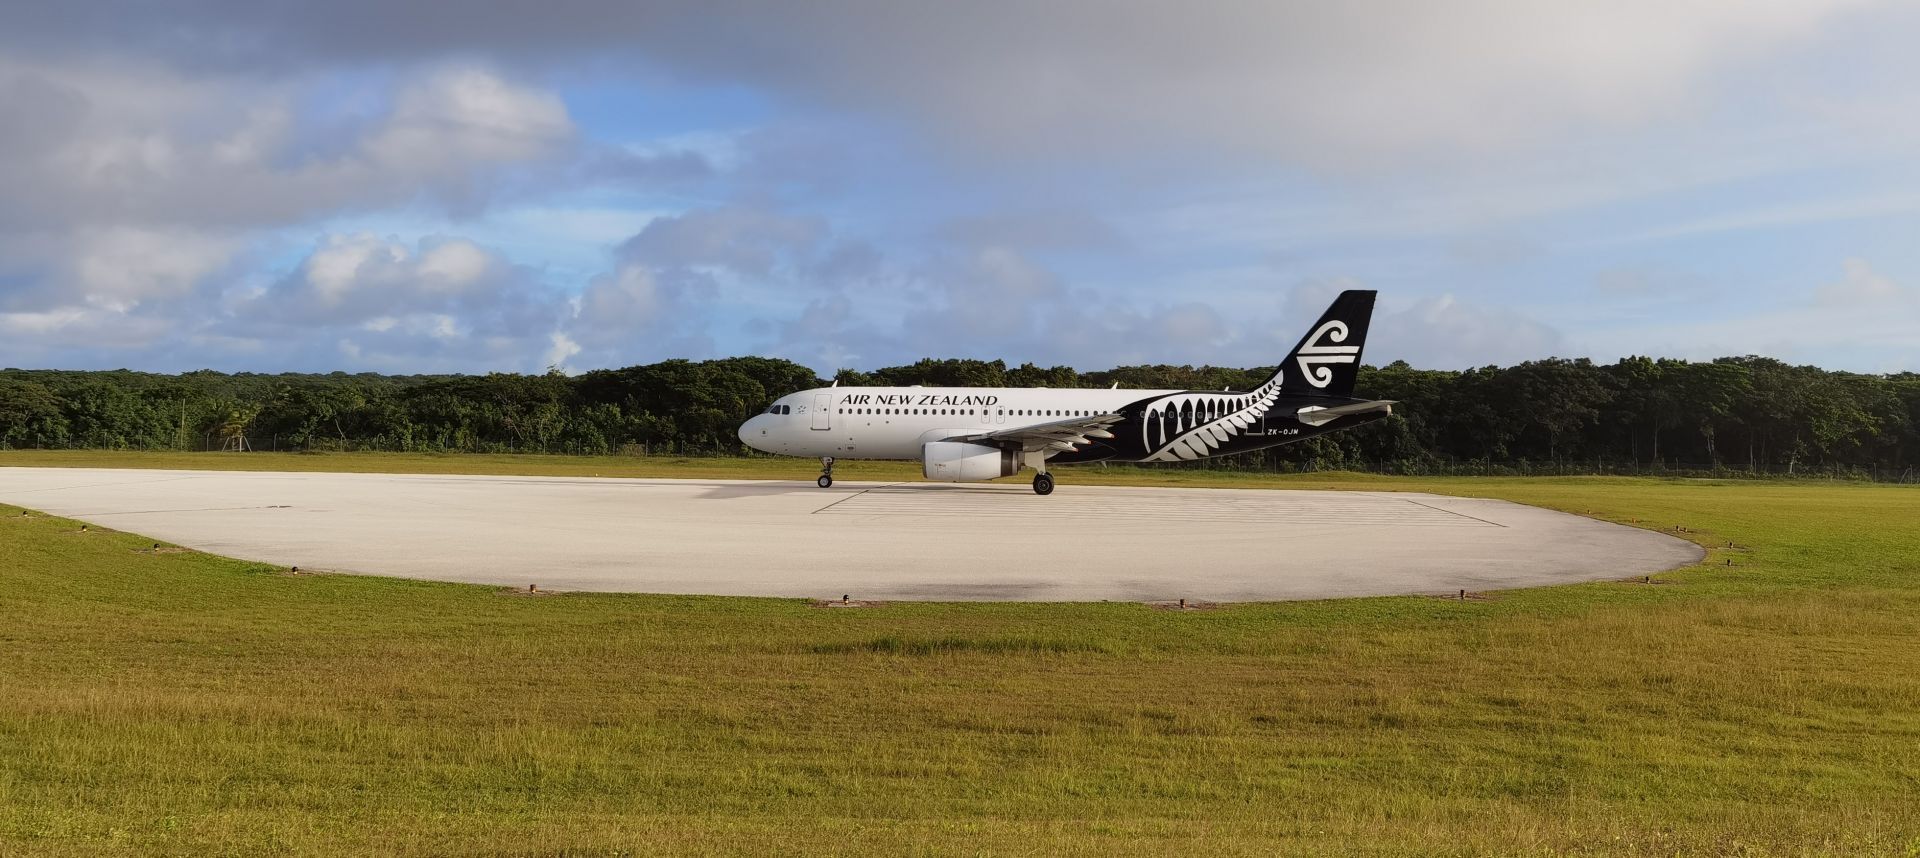 Air New Zealand on tarmac at IUE